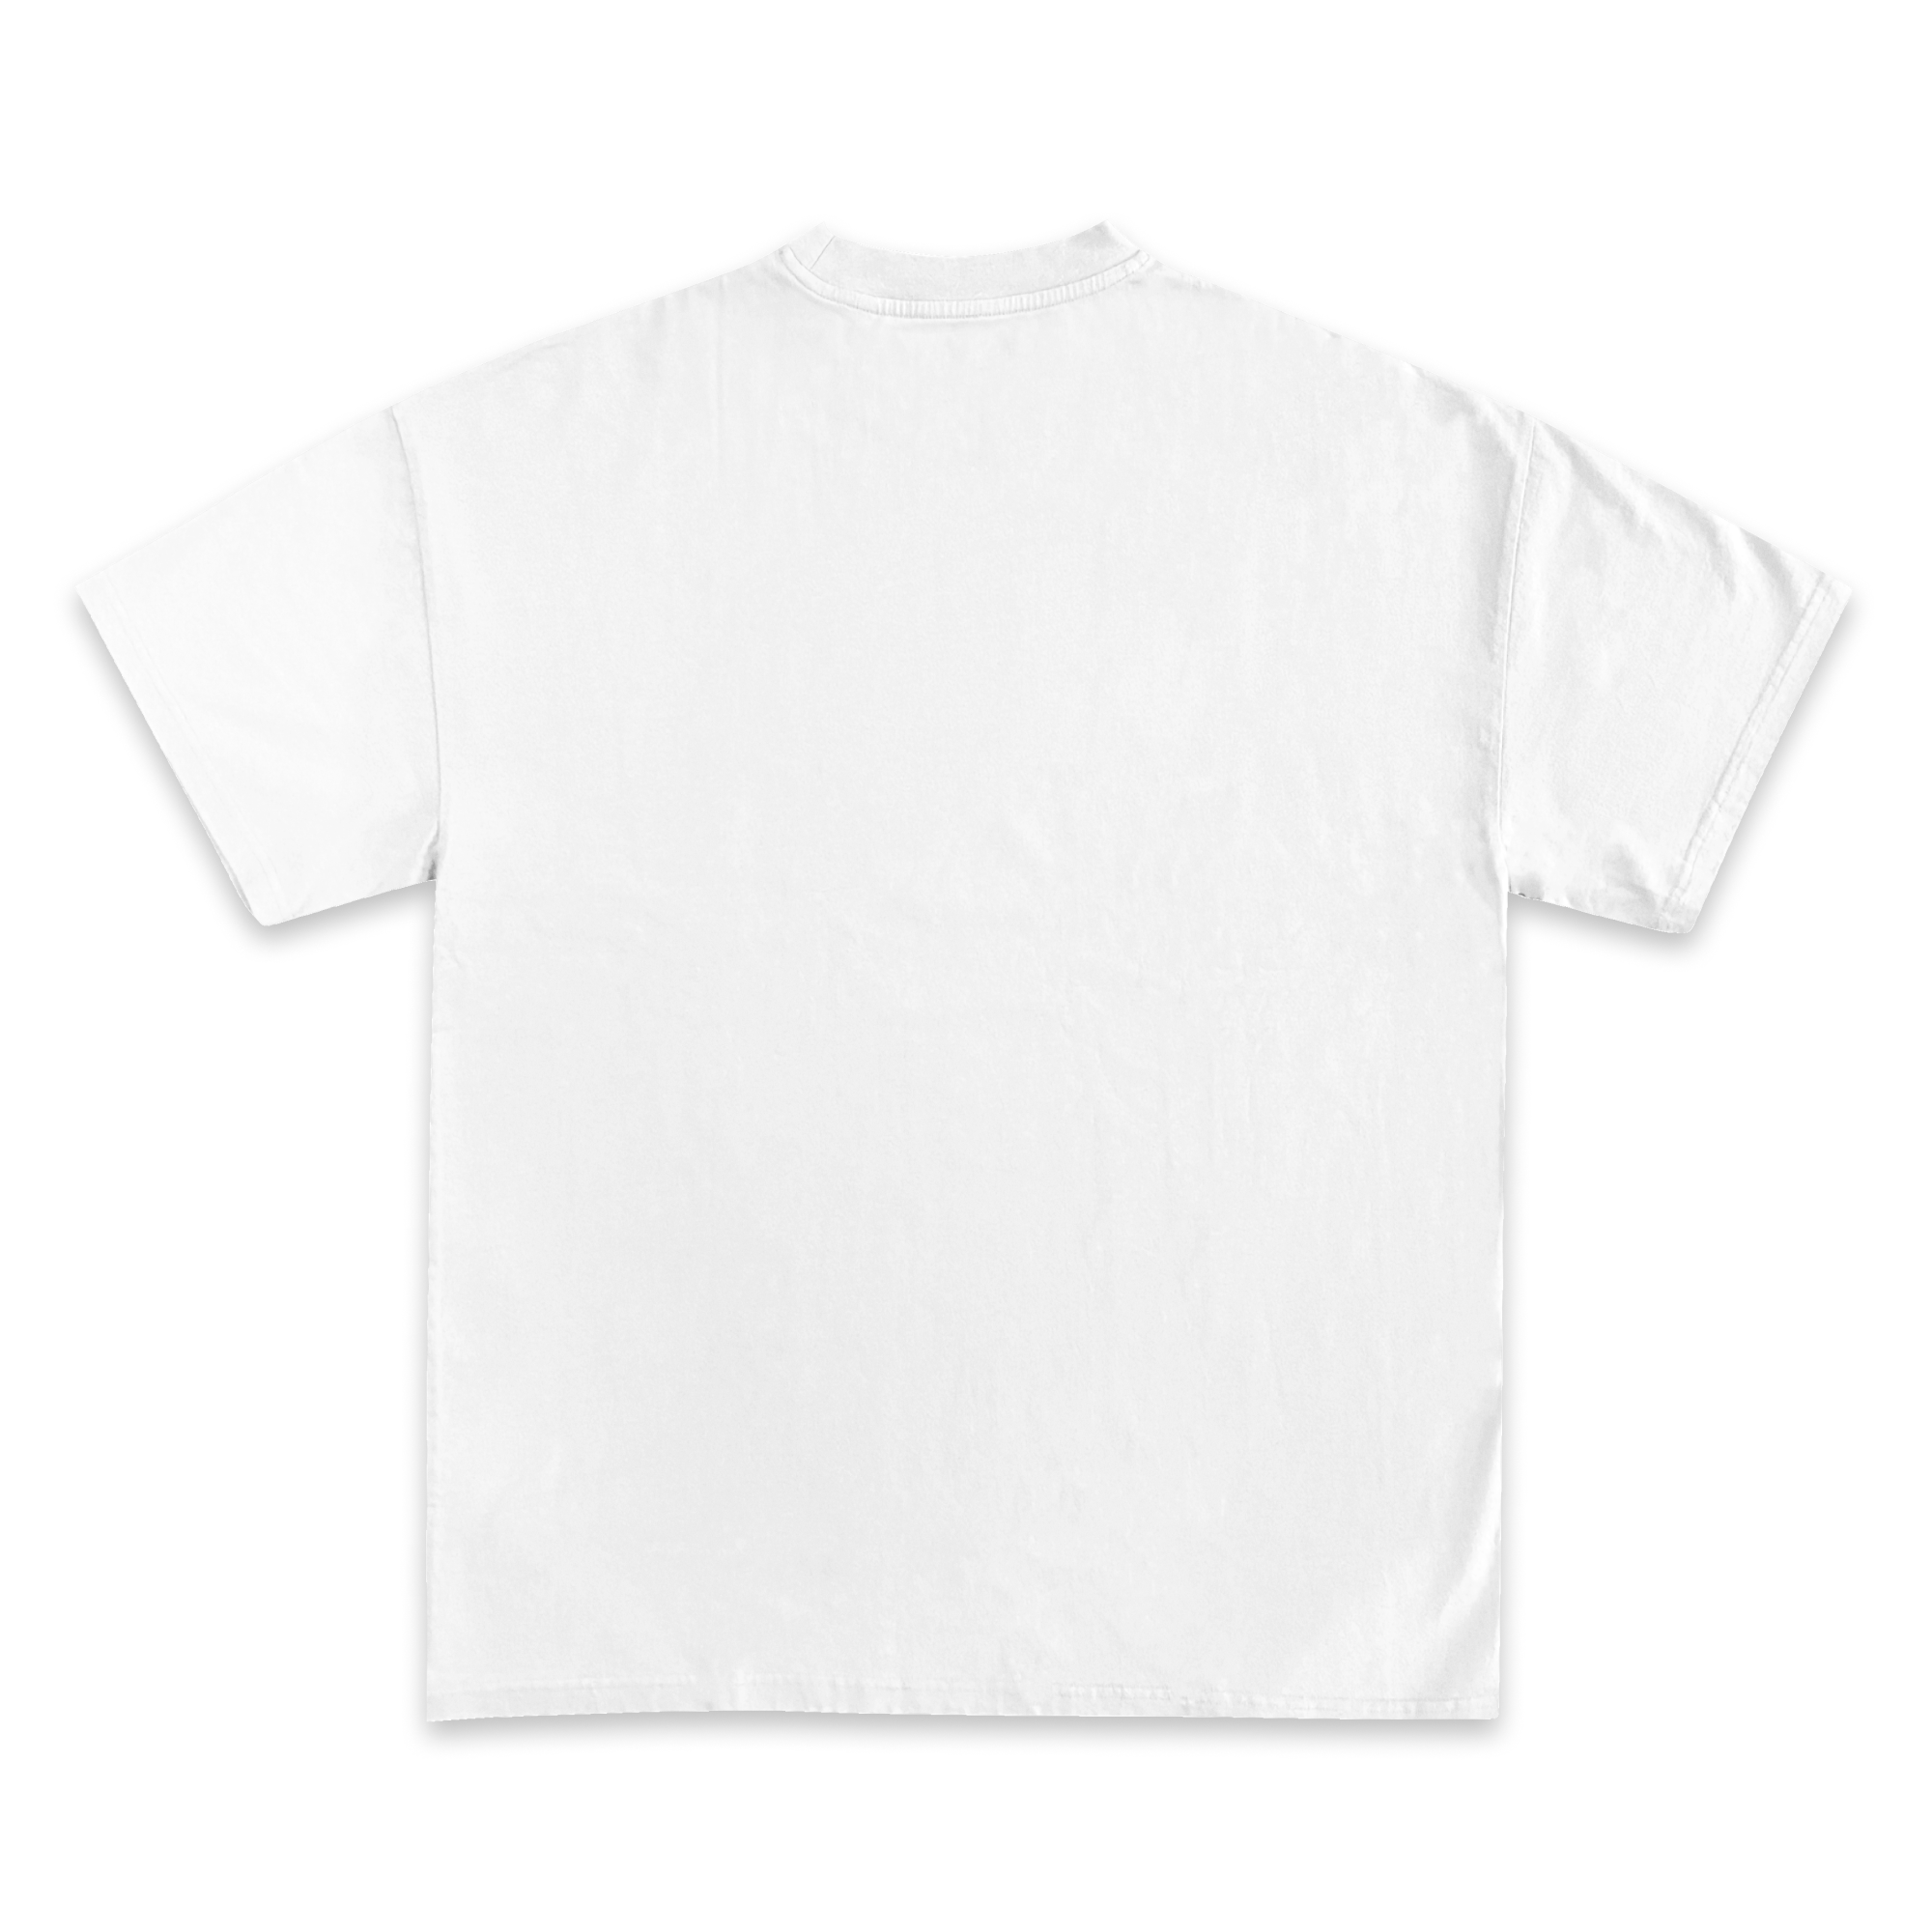 Kobe Bryant "Angel of LA" Graphic T-Shirt